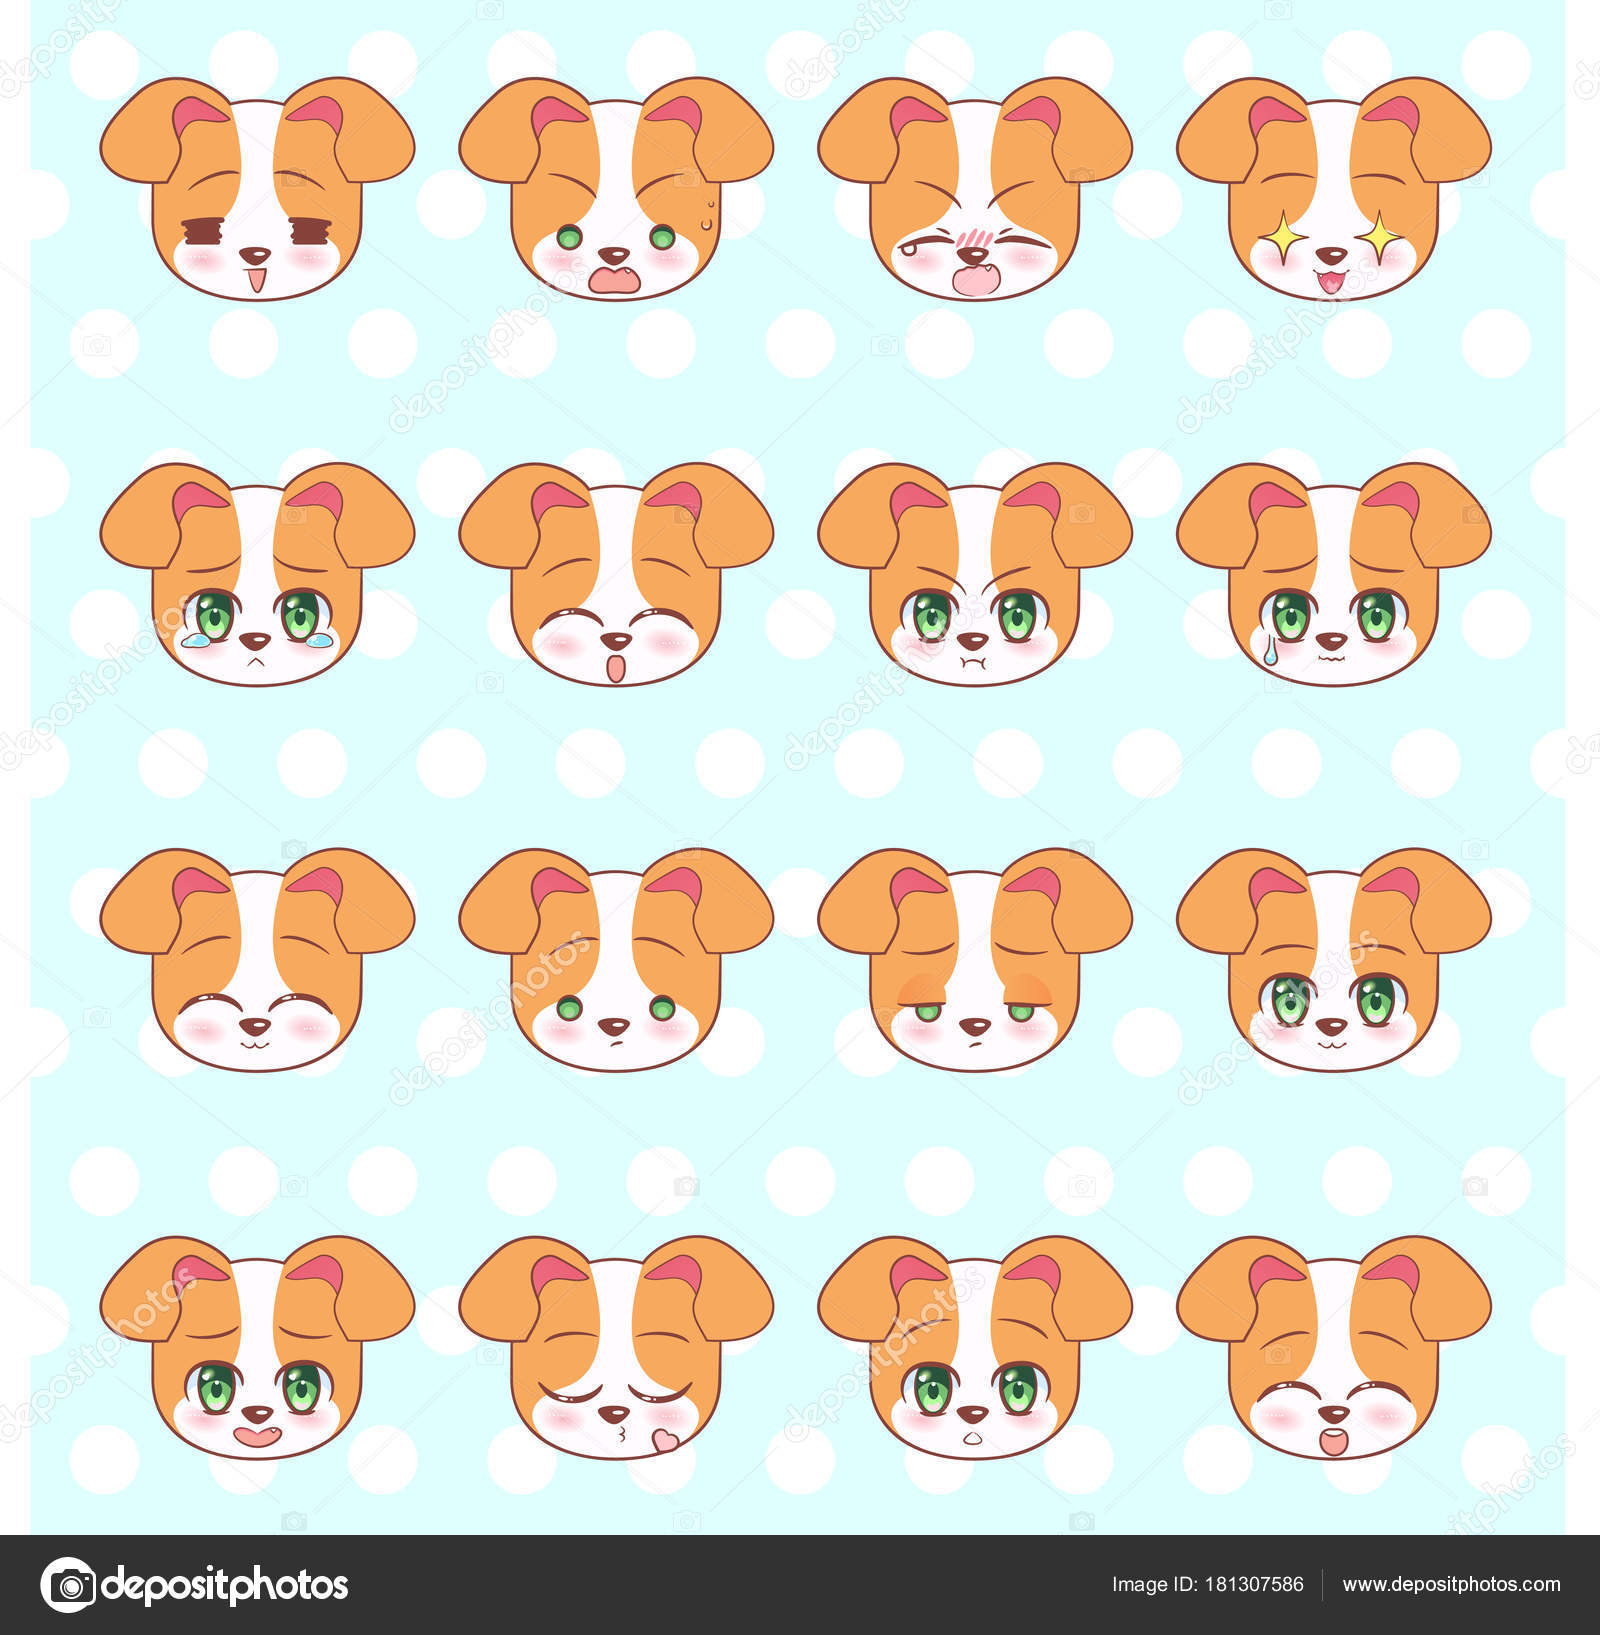 Emoticon emoji insieme di smiley colorato Sweet Kitty kawaii cute anime cartoon cagnolino